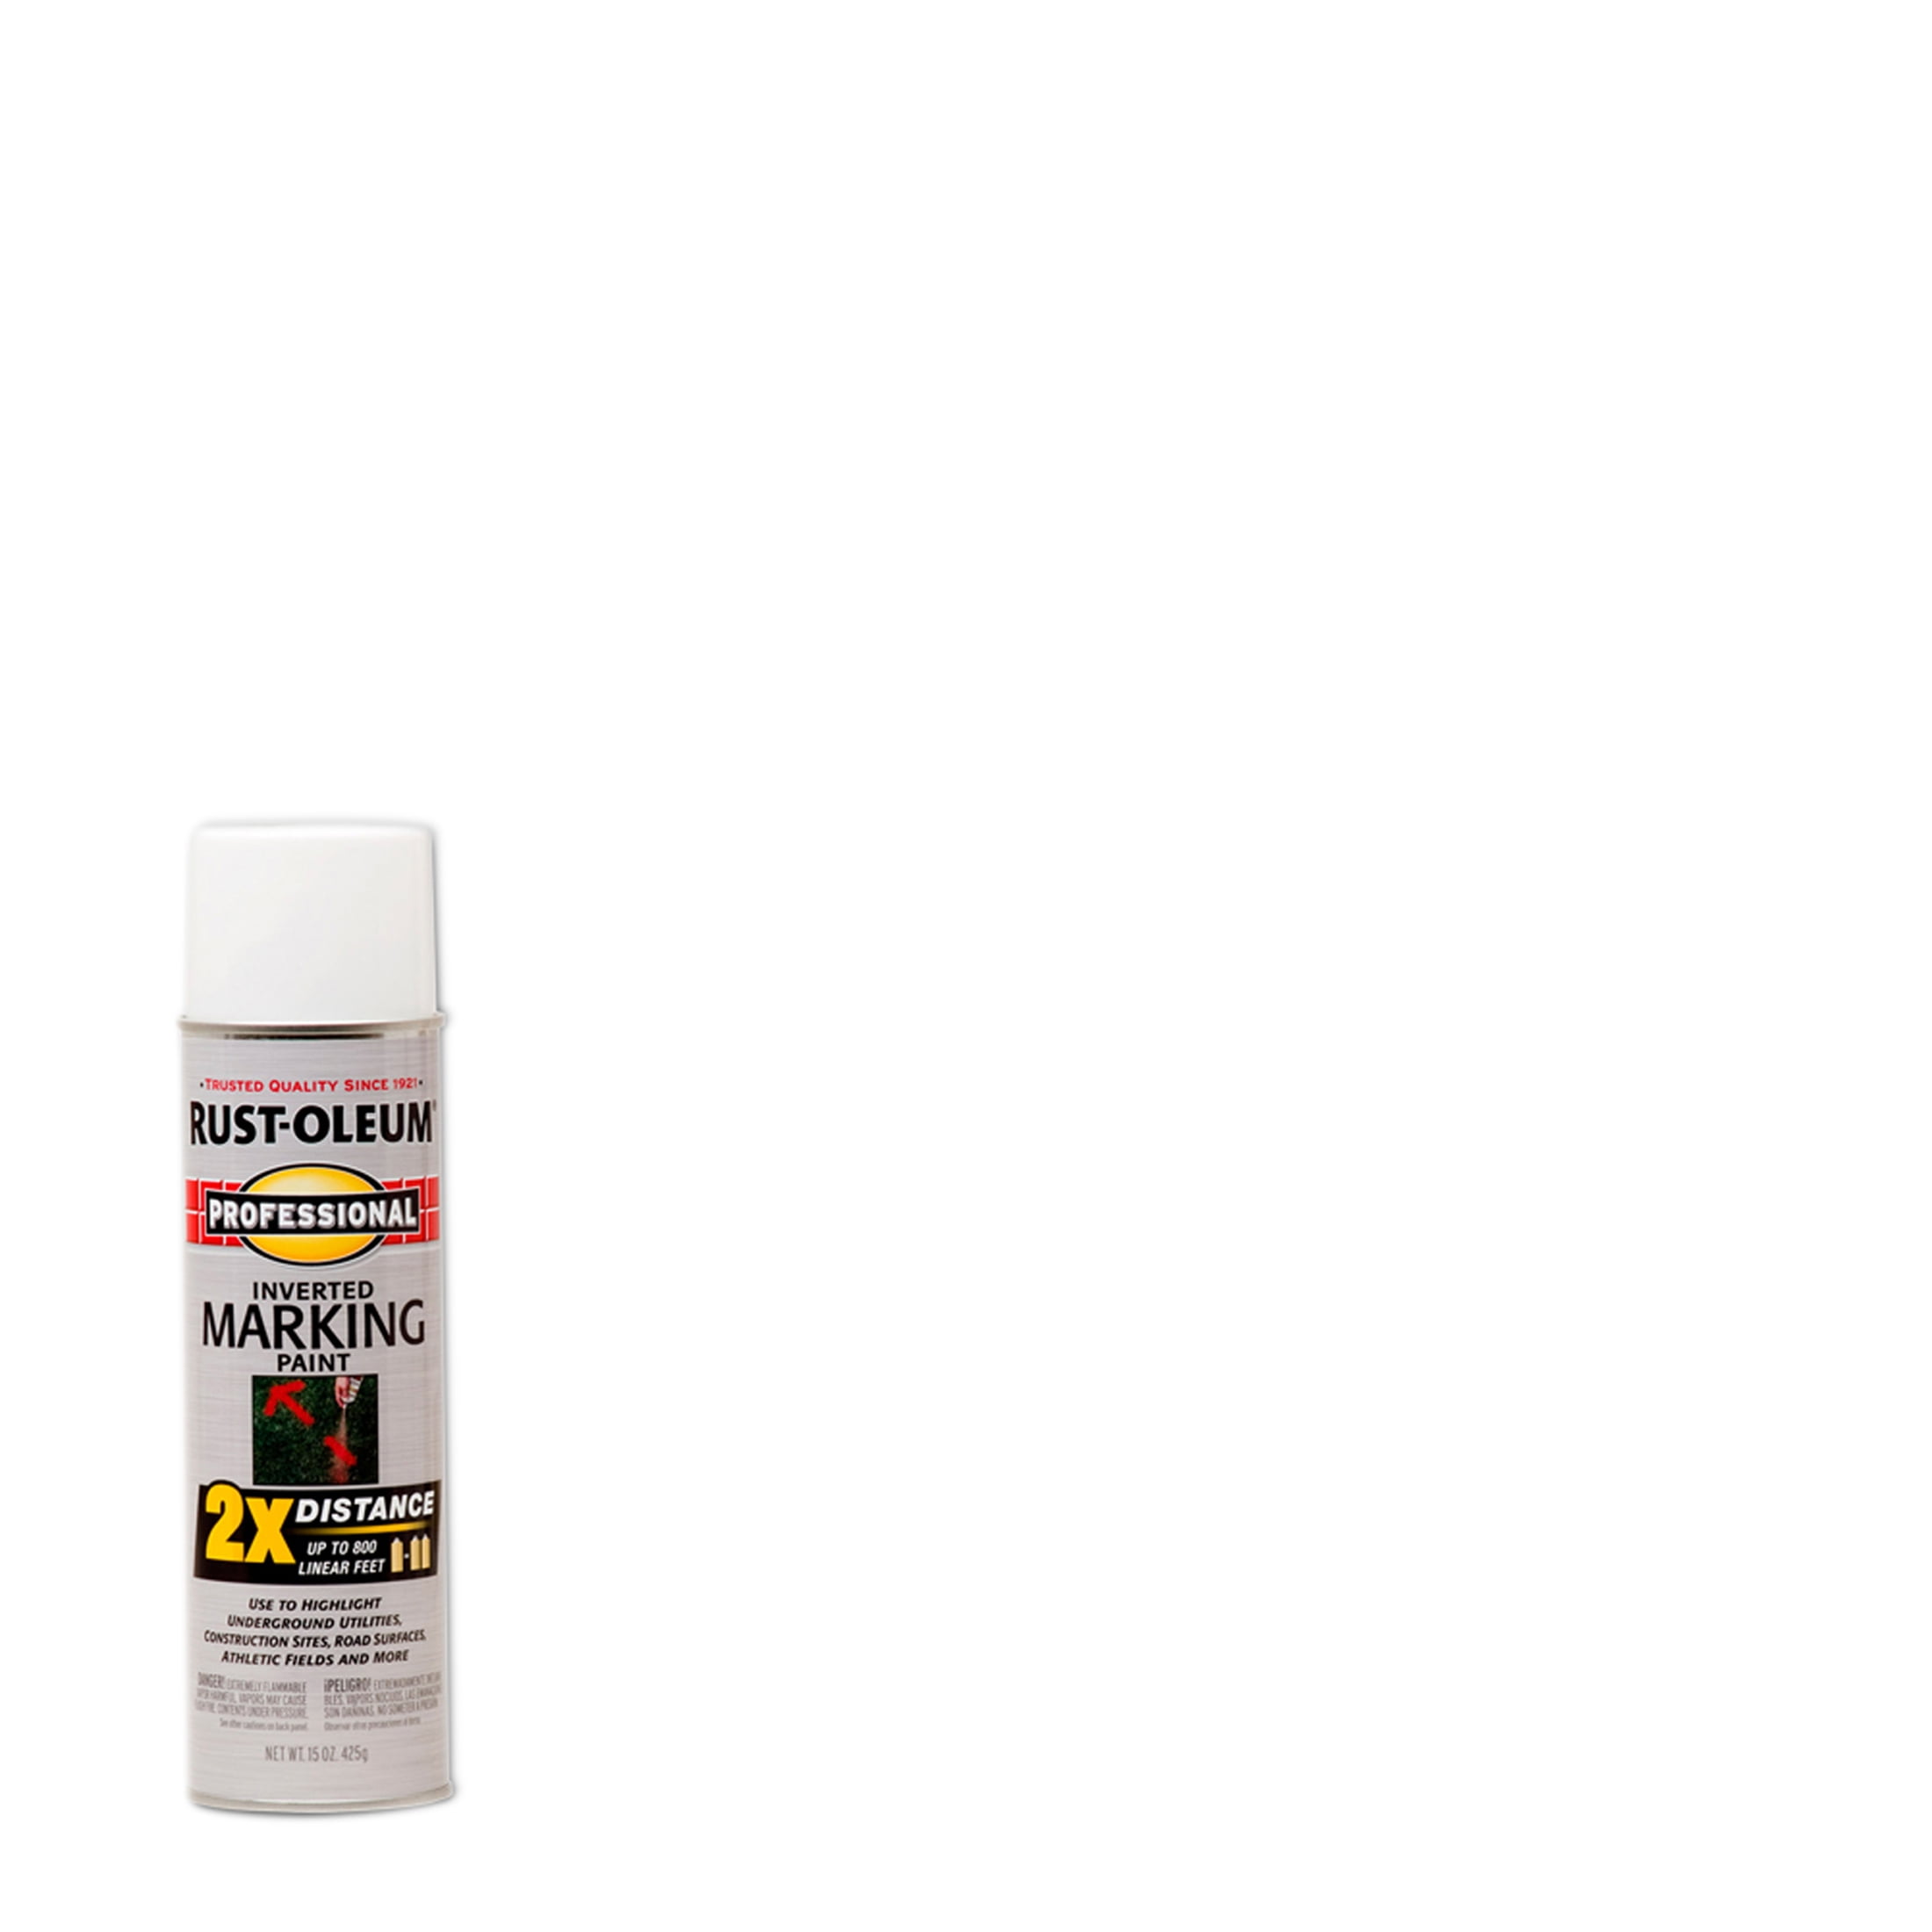 Oramask 831 topcoat spraypaint problems - Shapeoko - Carbide 3D